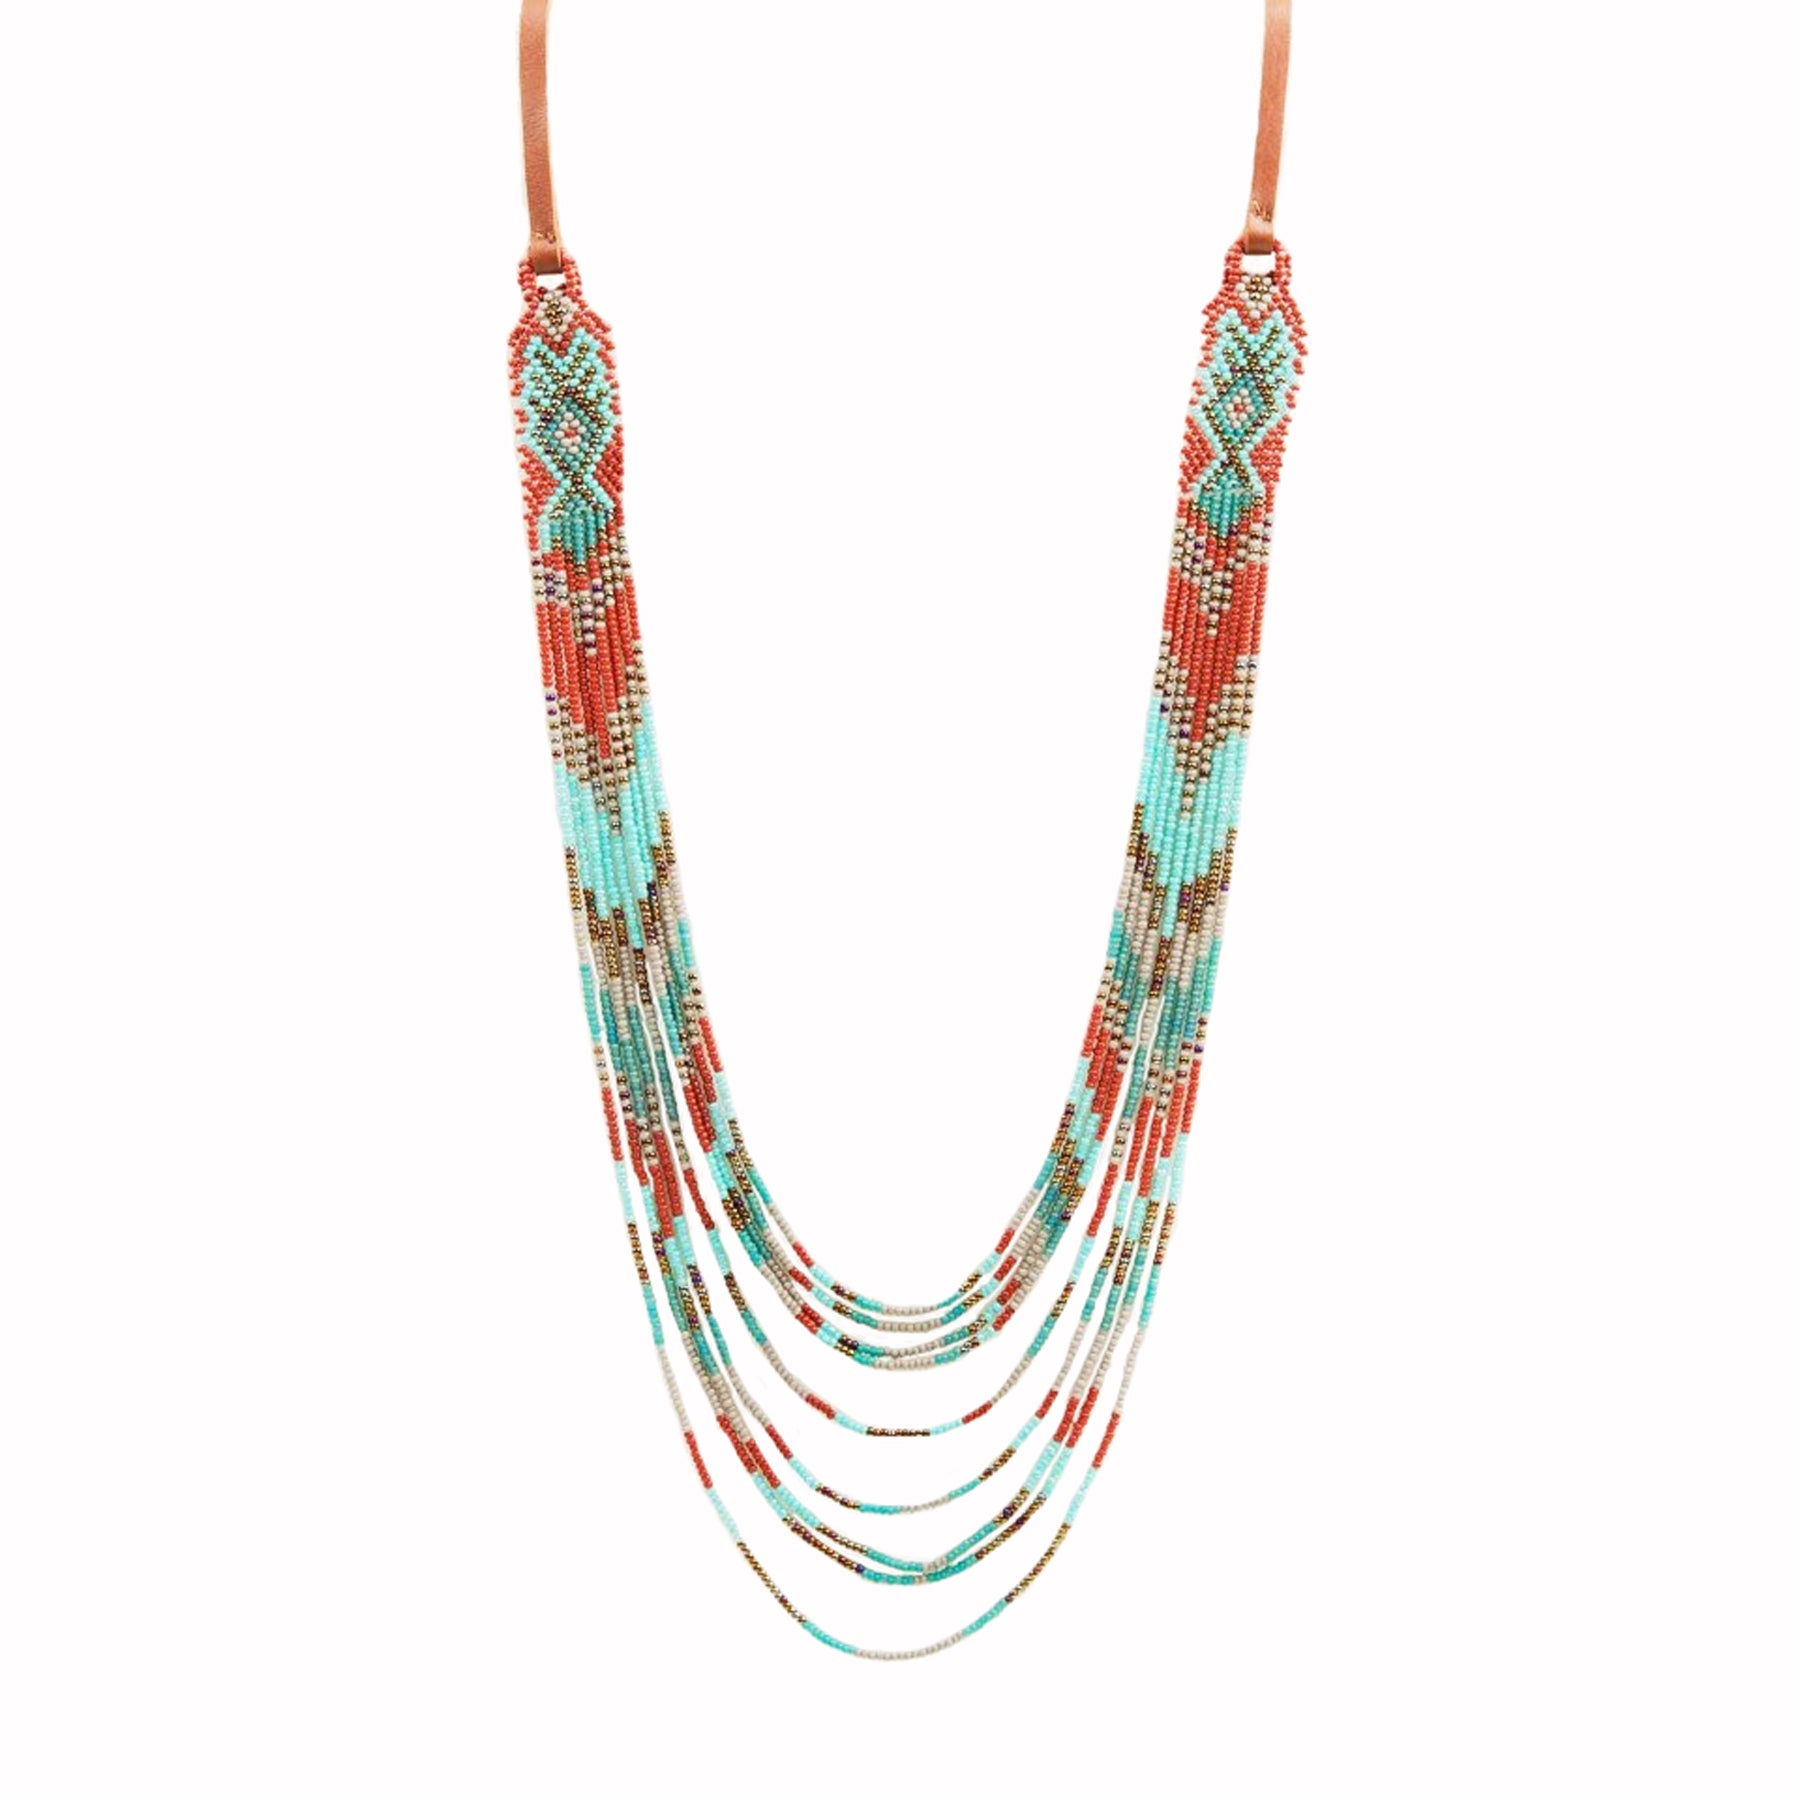 Mayan Loom Bead Necklace